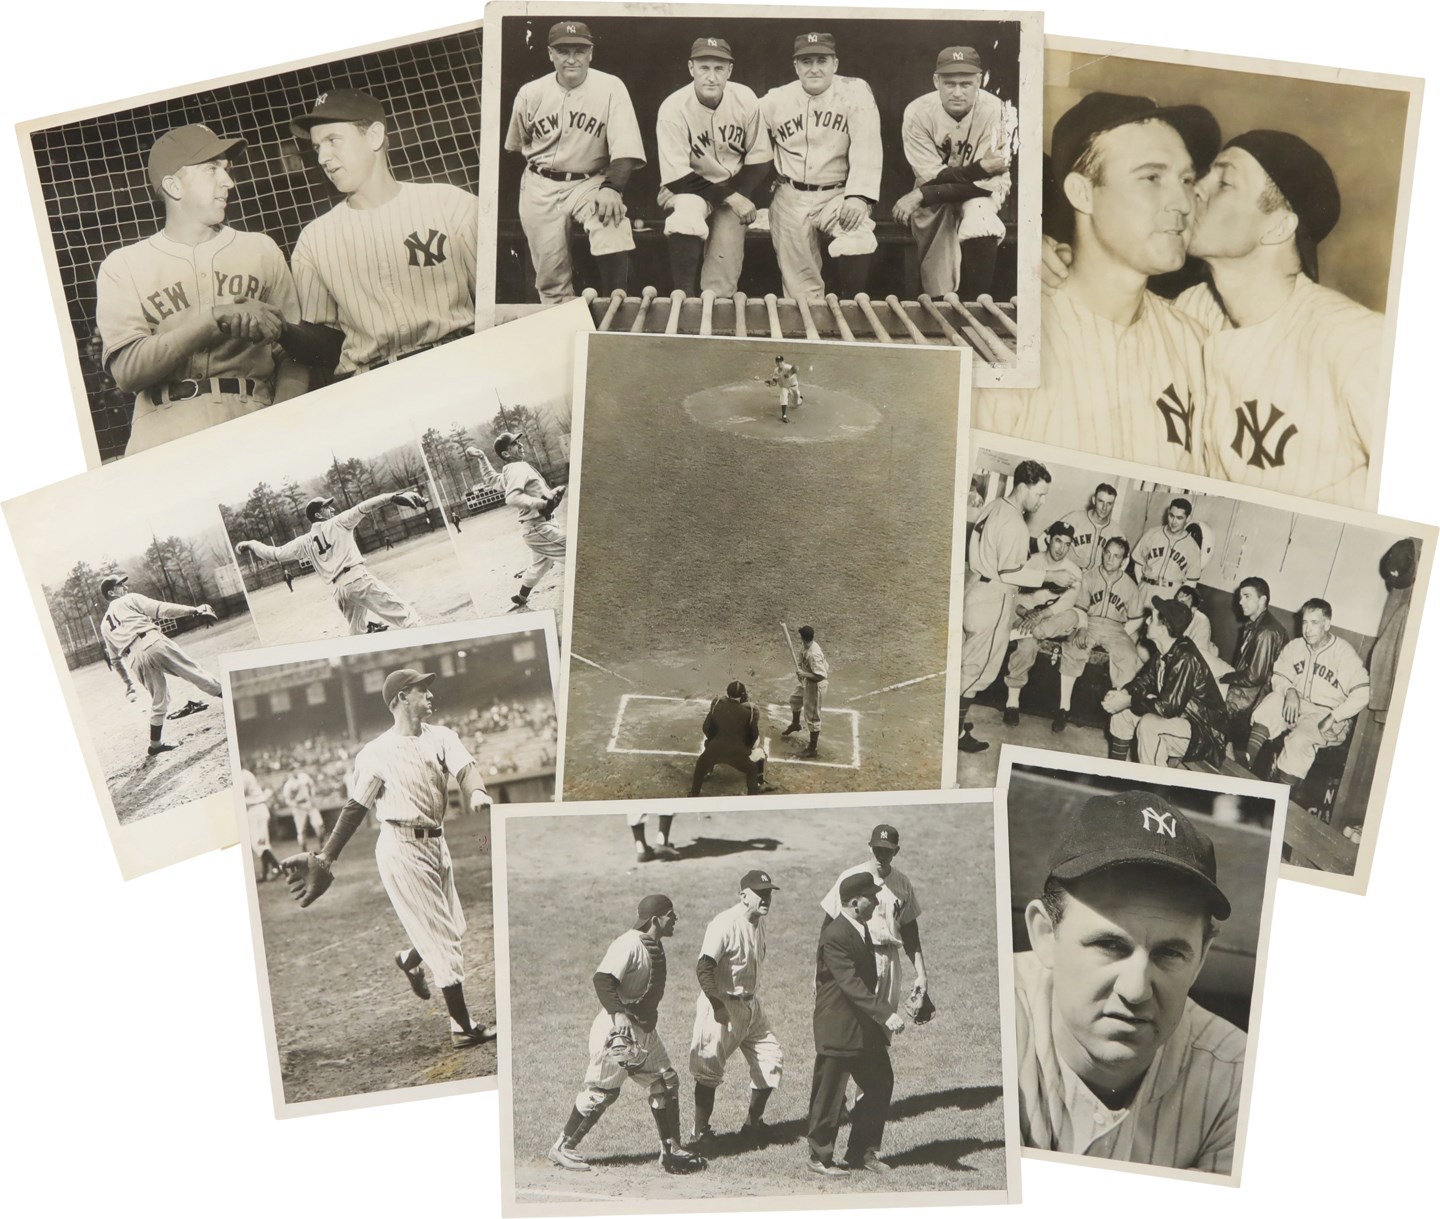 Vintage Sports Photographs - Vintage New York Yankees & Giants Original Photograph Collection w/Lou Gehrig & Mel Ott (21)